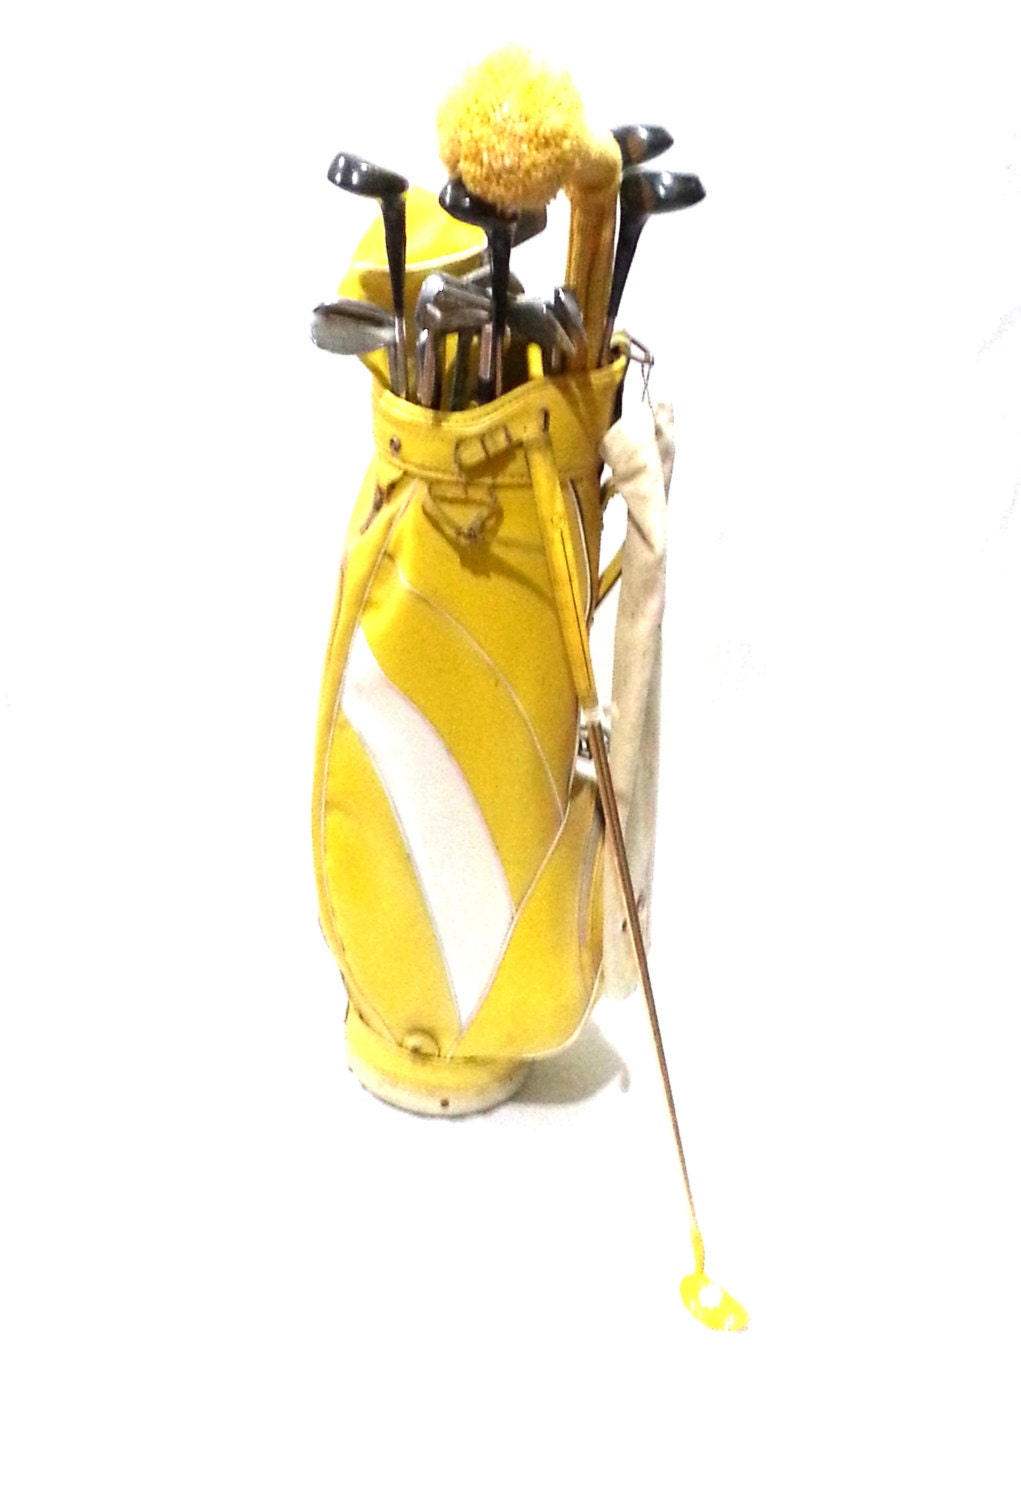 Burton Yellow Golf Bag with Set of Golf Clubs by DeAnnasAttic